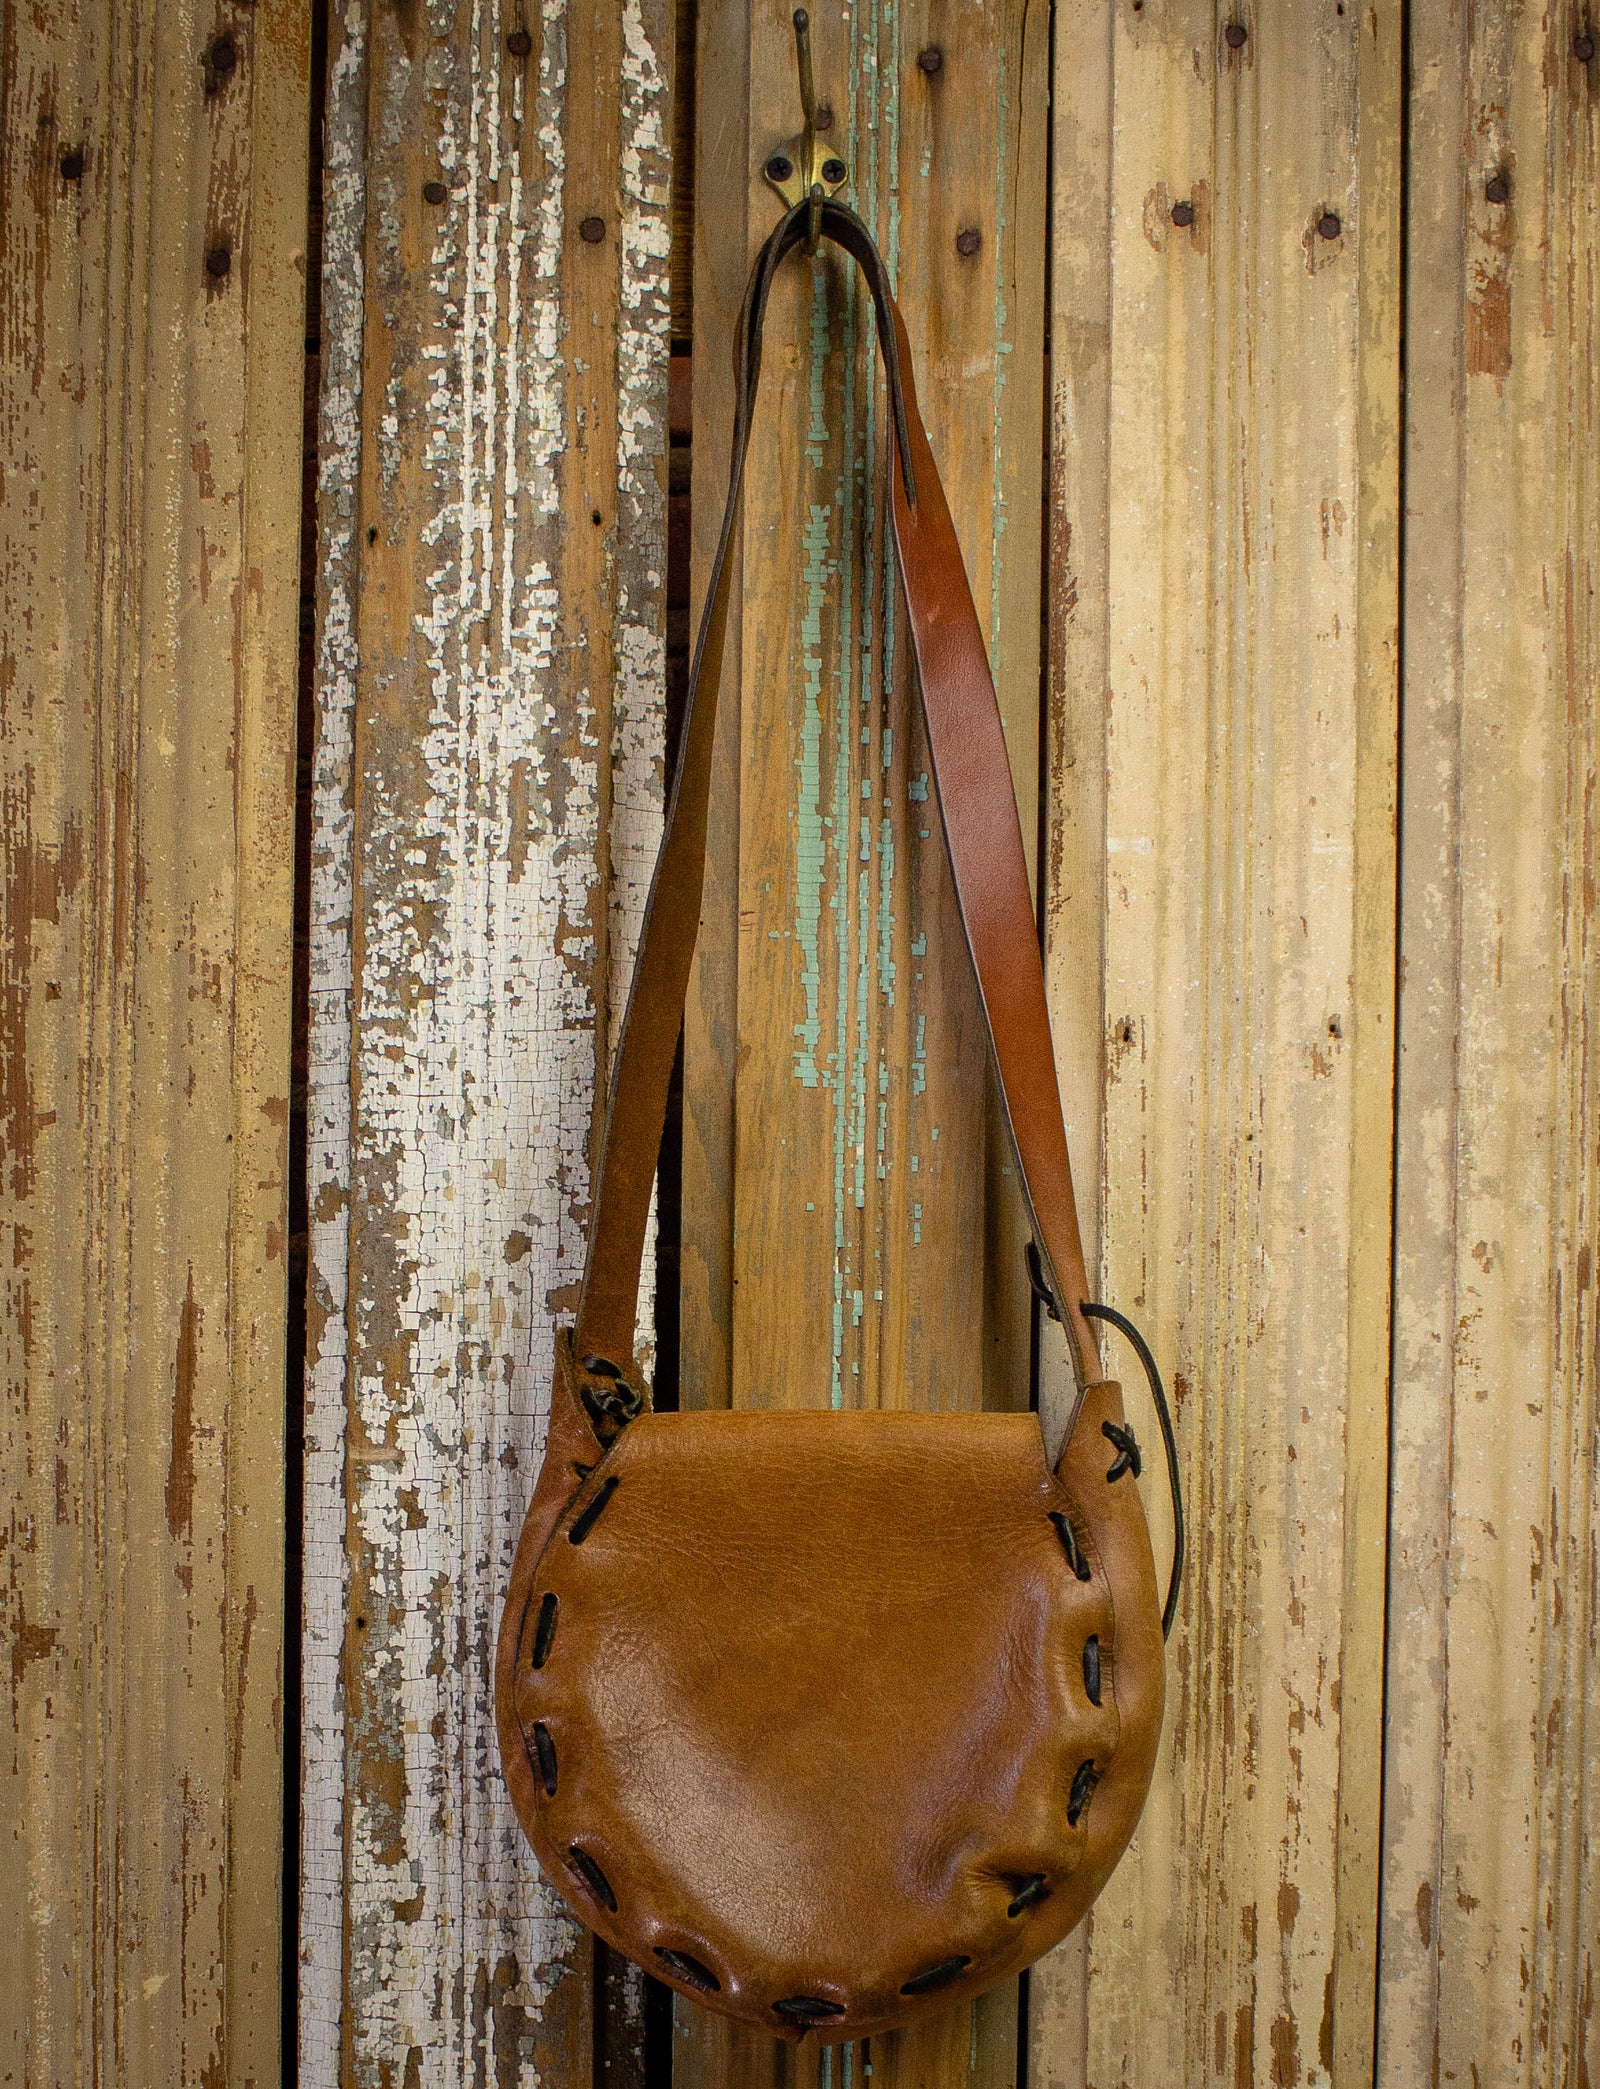 Vintage 70s Floral Leather Hand Tooled bag